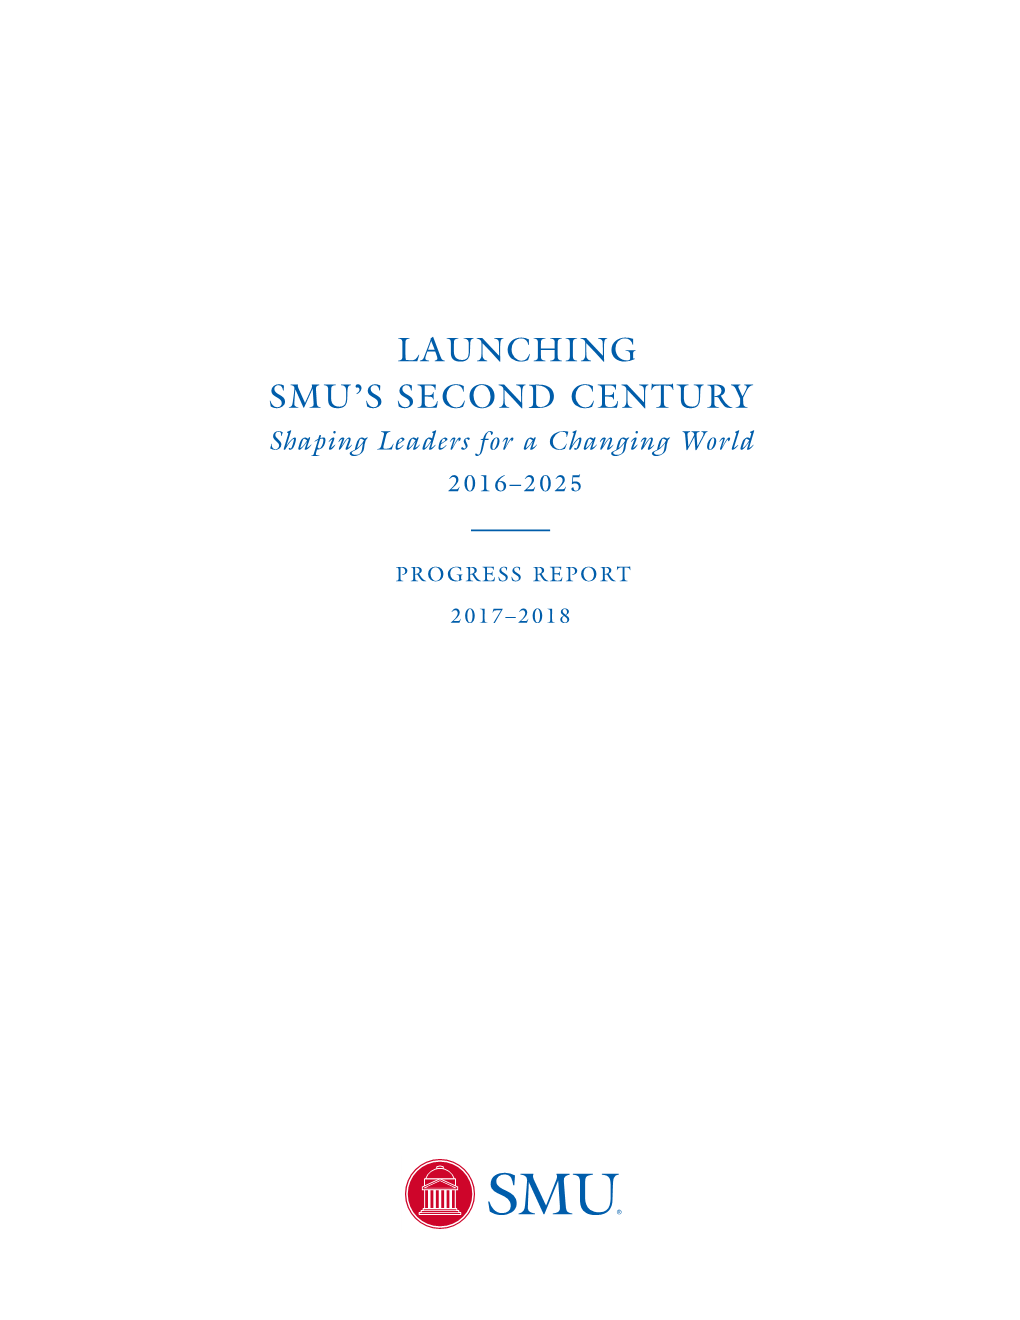 Launching Smu's Second Century